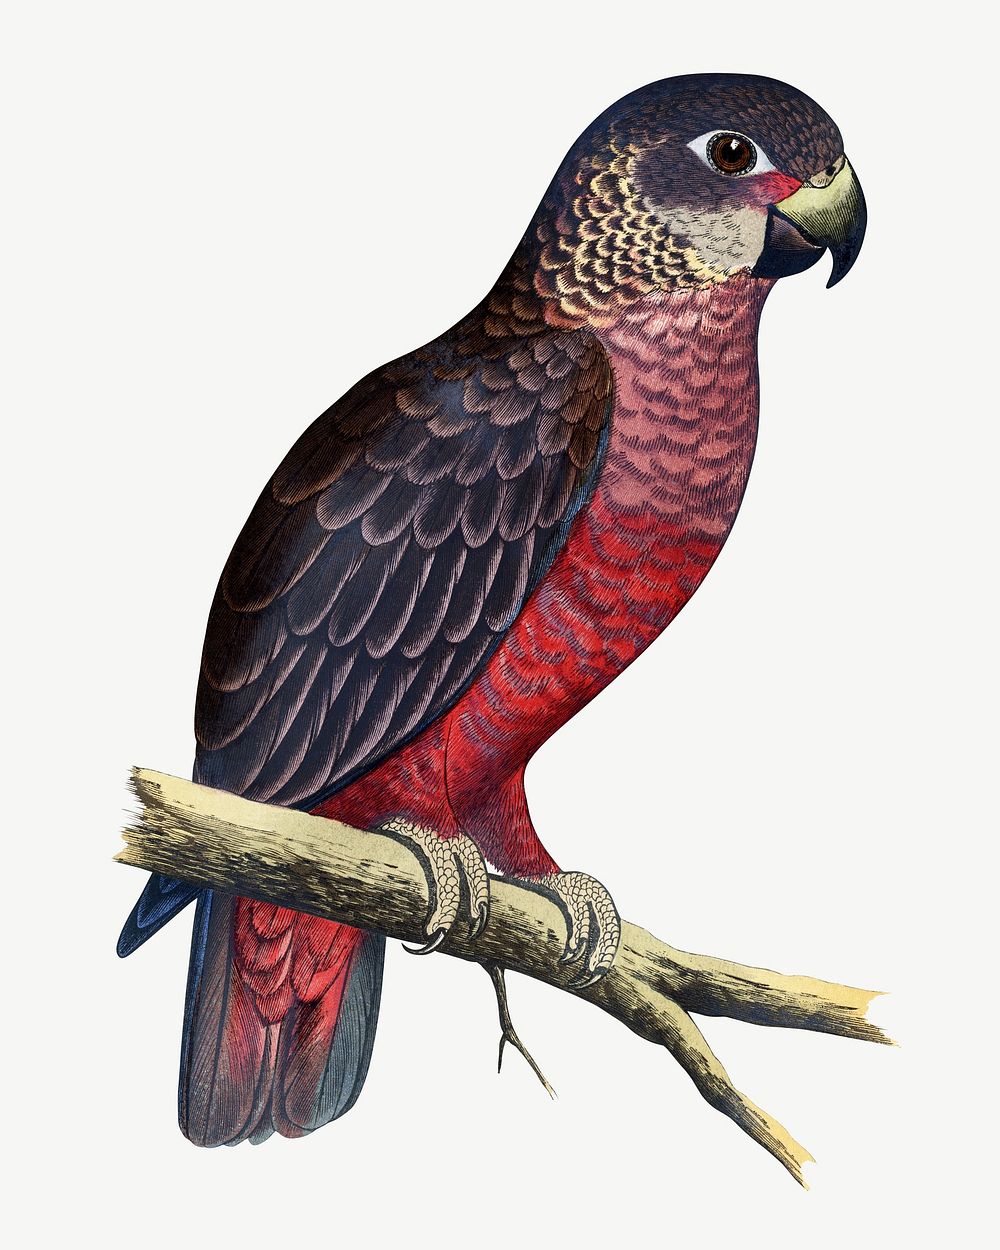 Violet parrot, vintage bird illustration psd. Remixed by rawpixel.